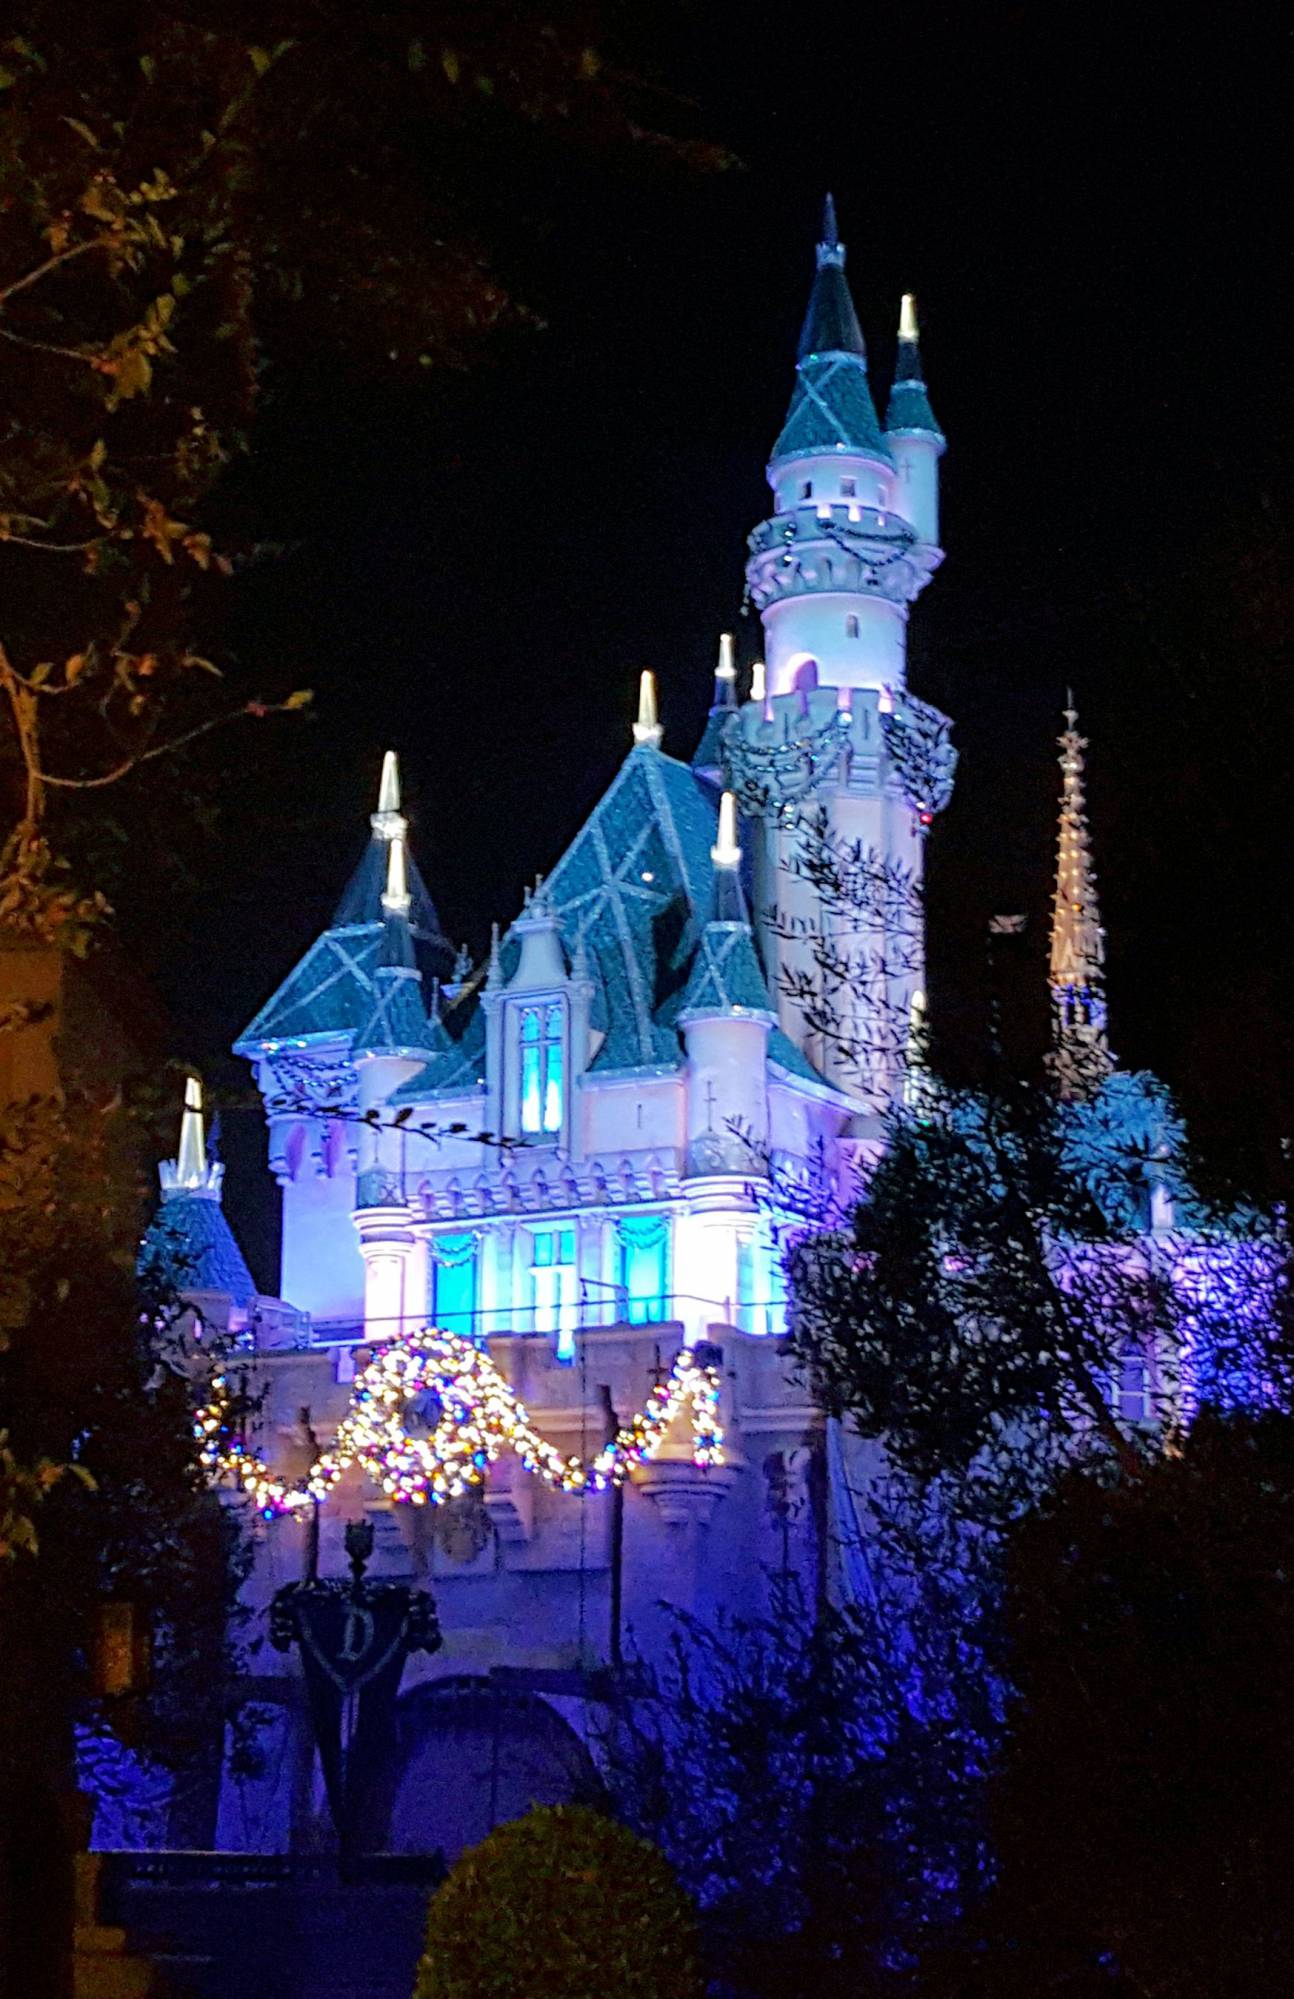 Disneyland Sleeping Beauty Castle Diamond Celebration nighttime view